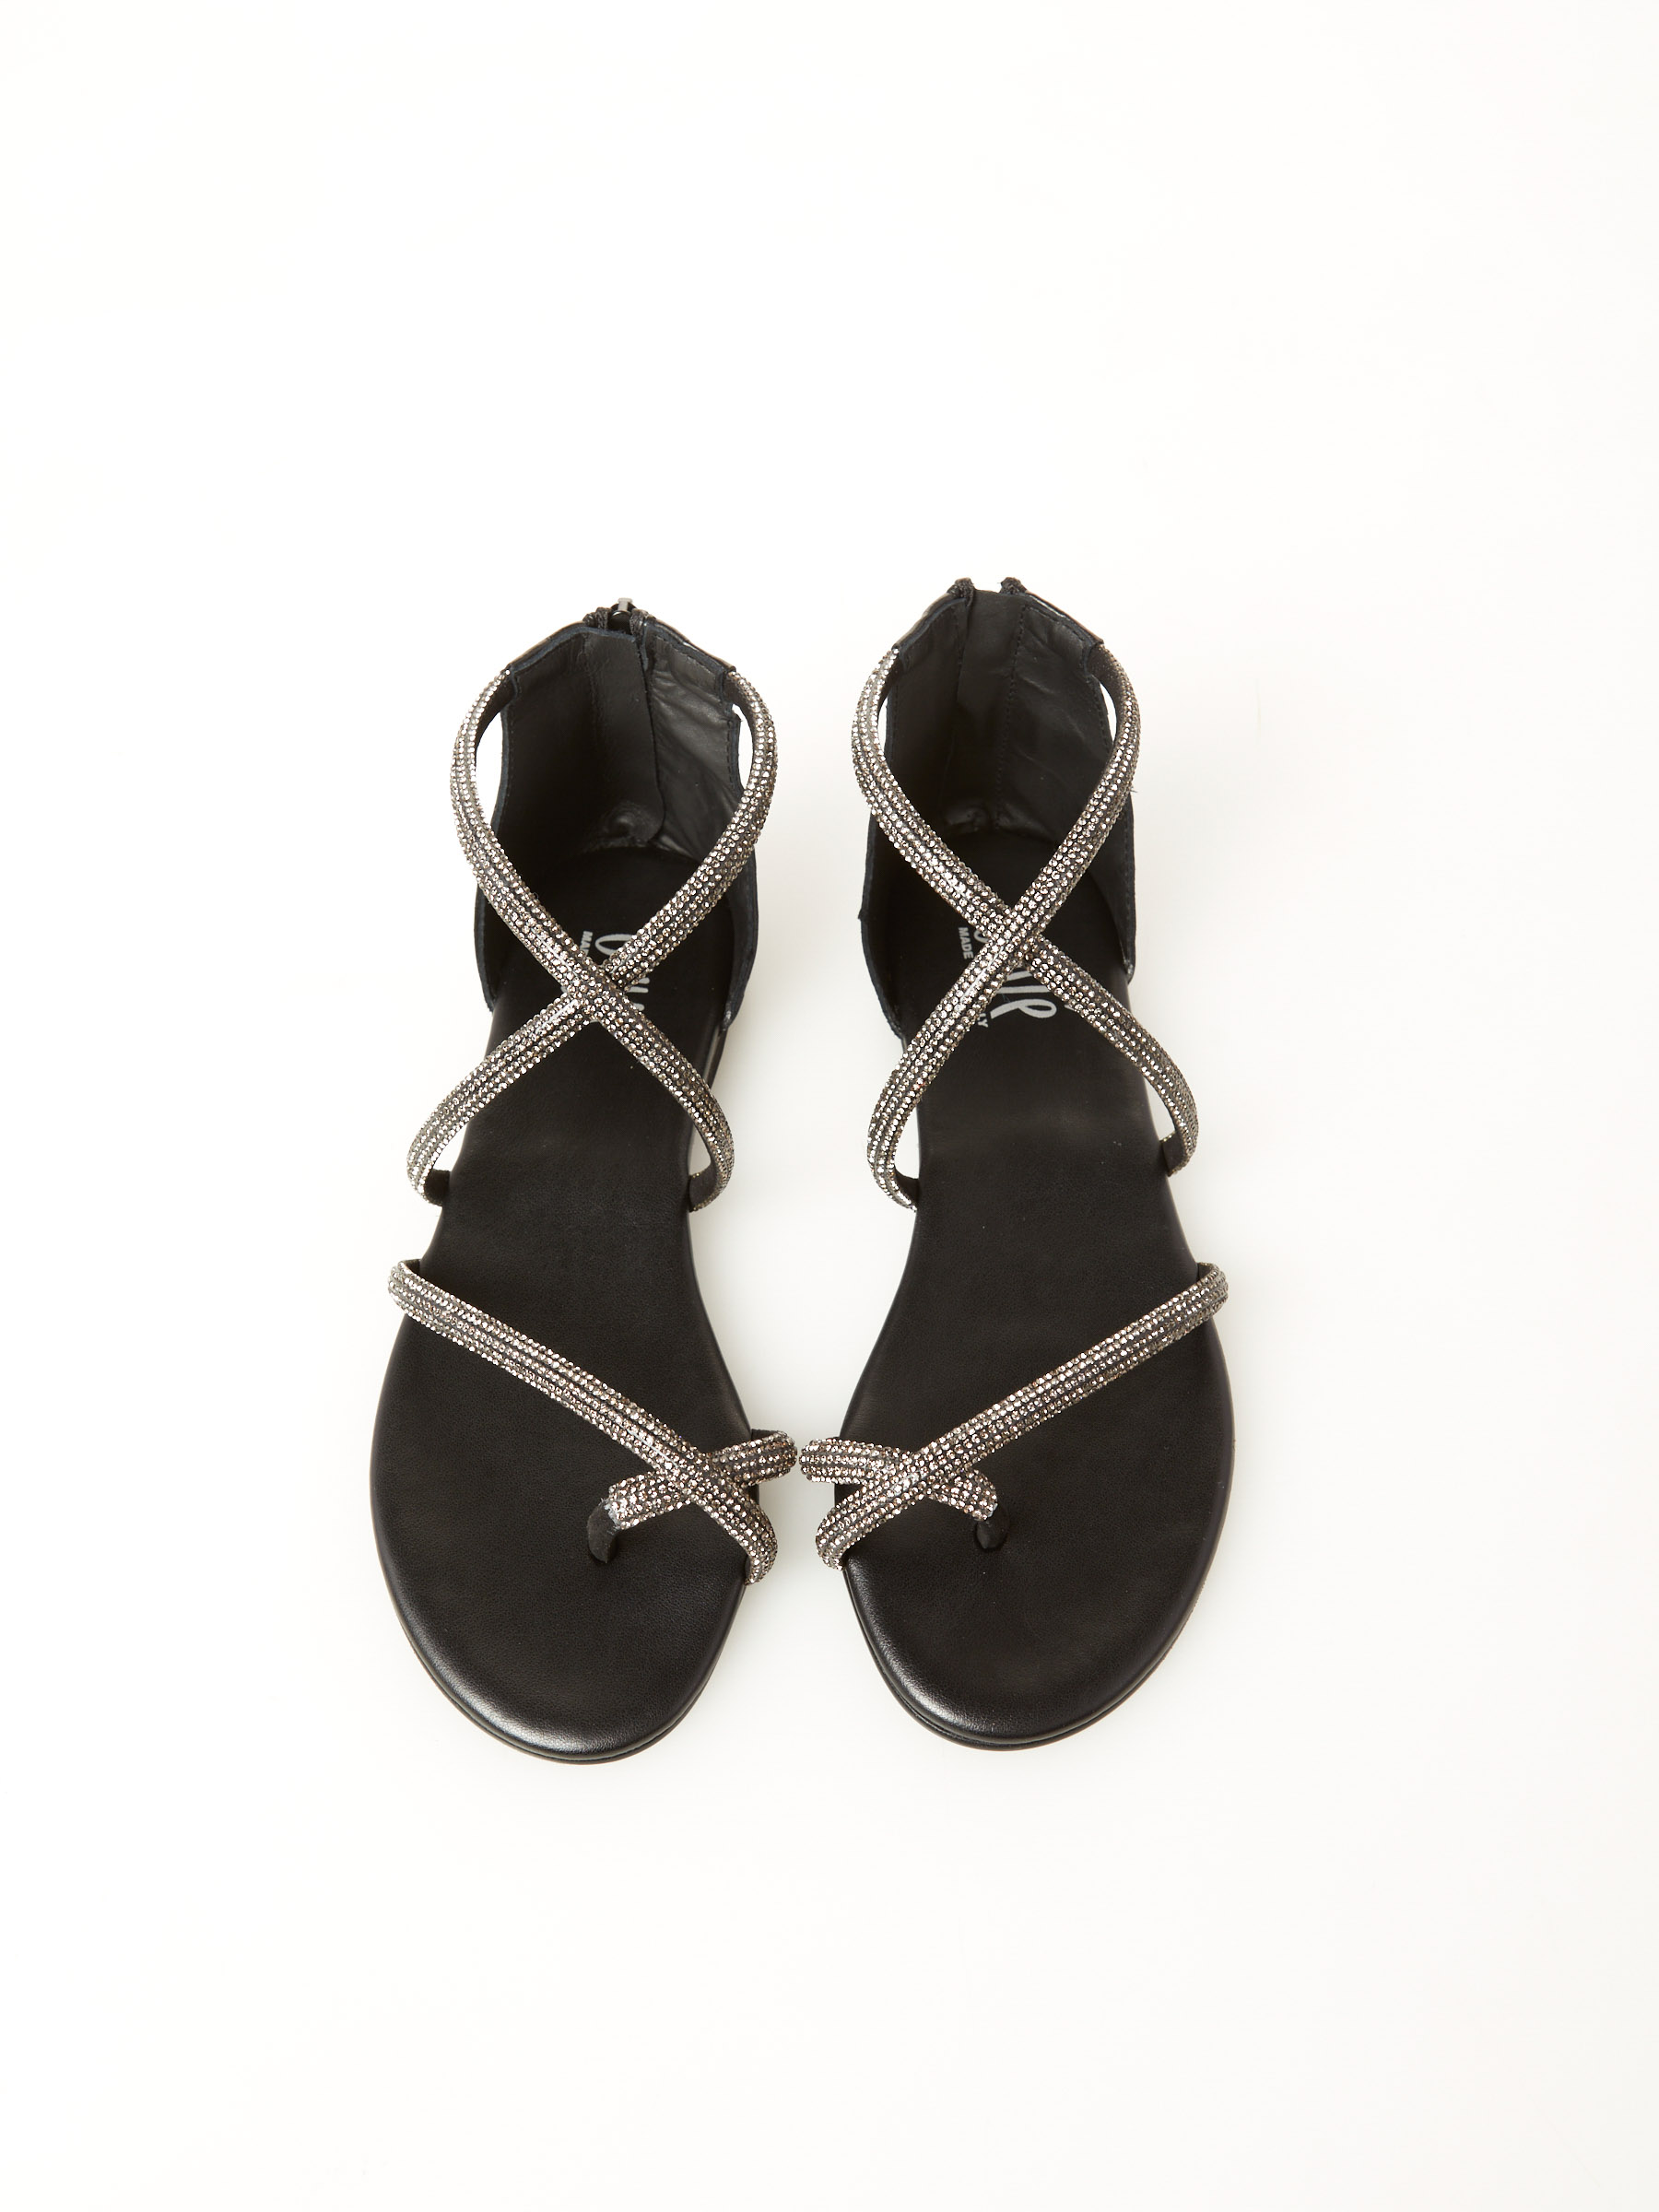 Sandal With Rhinestones F0545554-0552 Outlet Shop Online